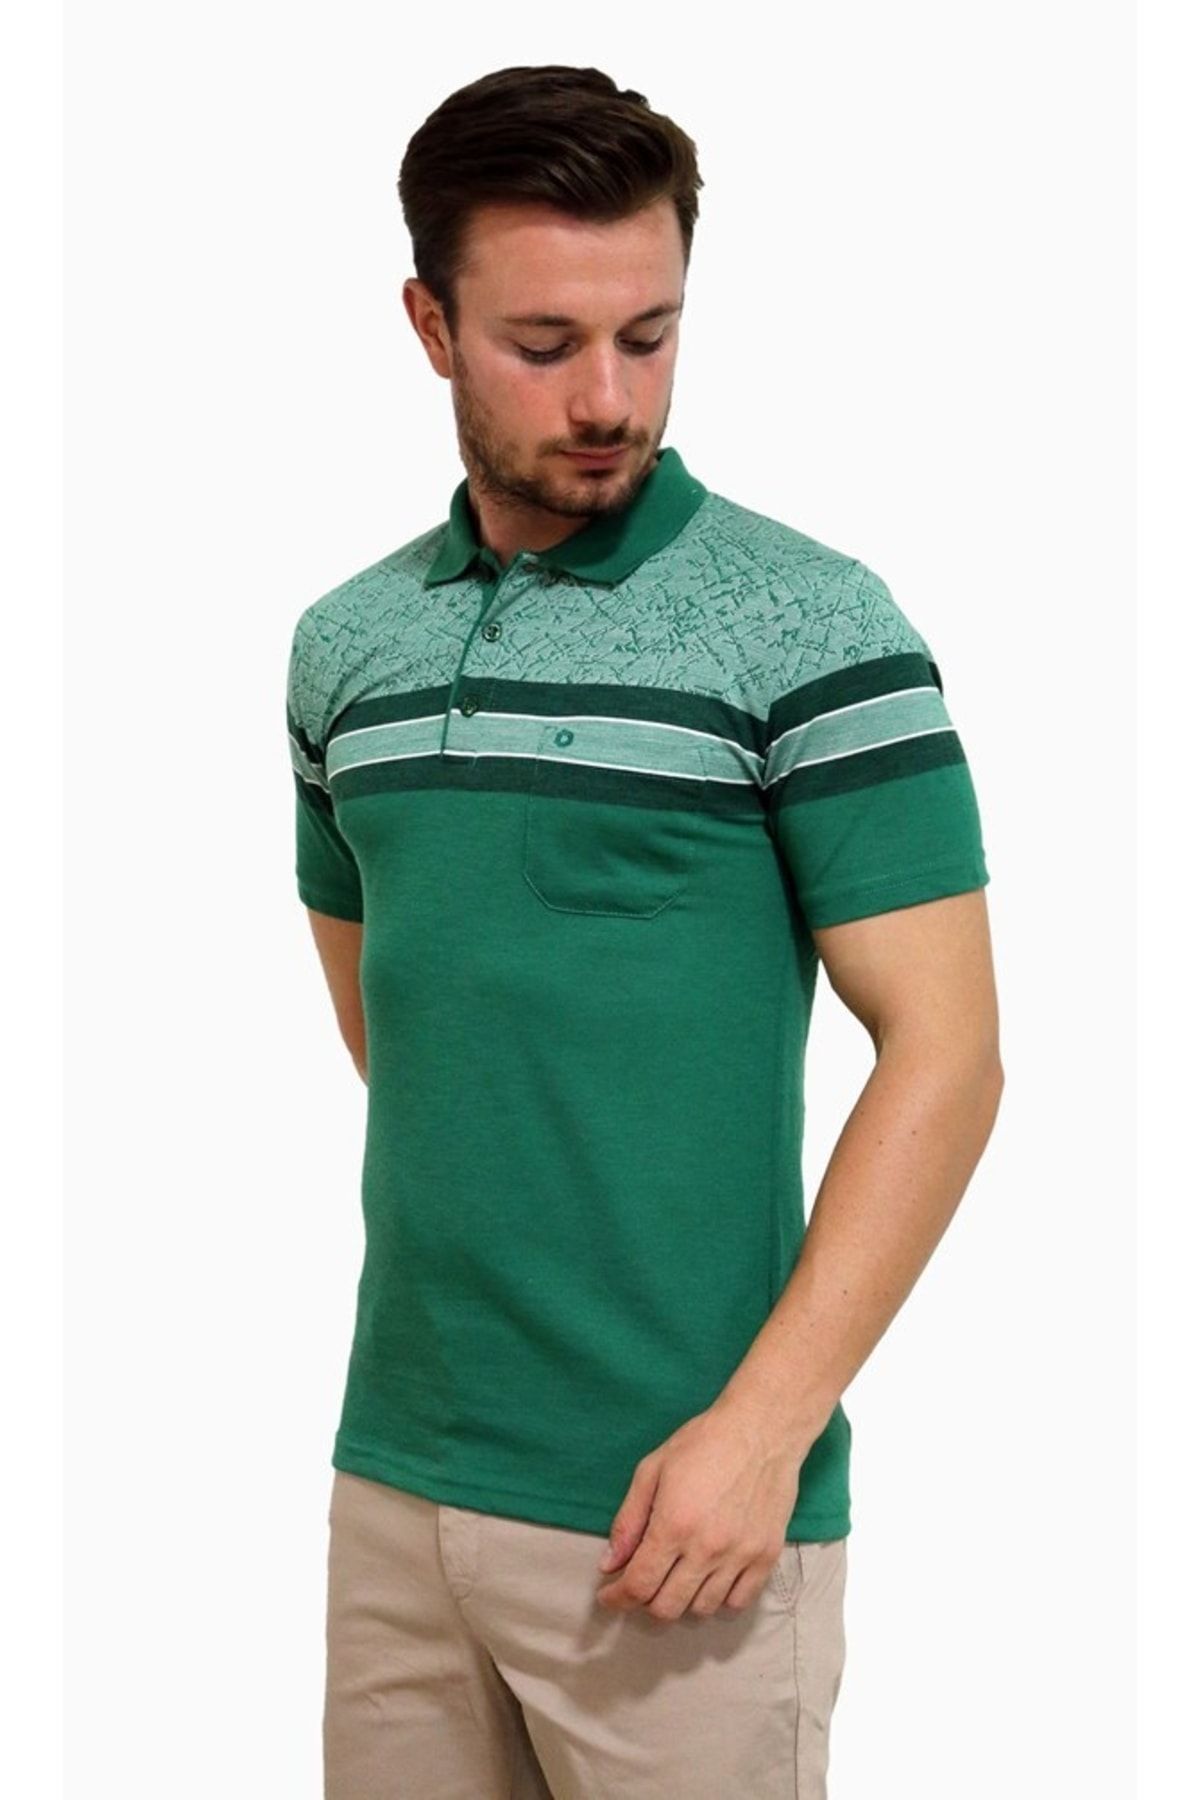 Diandor Erkek Polo Yaka T-shirt Yeşil-nefti-beyaz 2217009